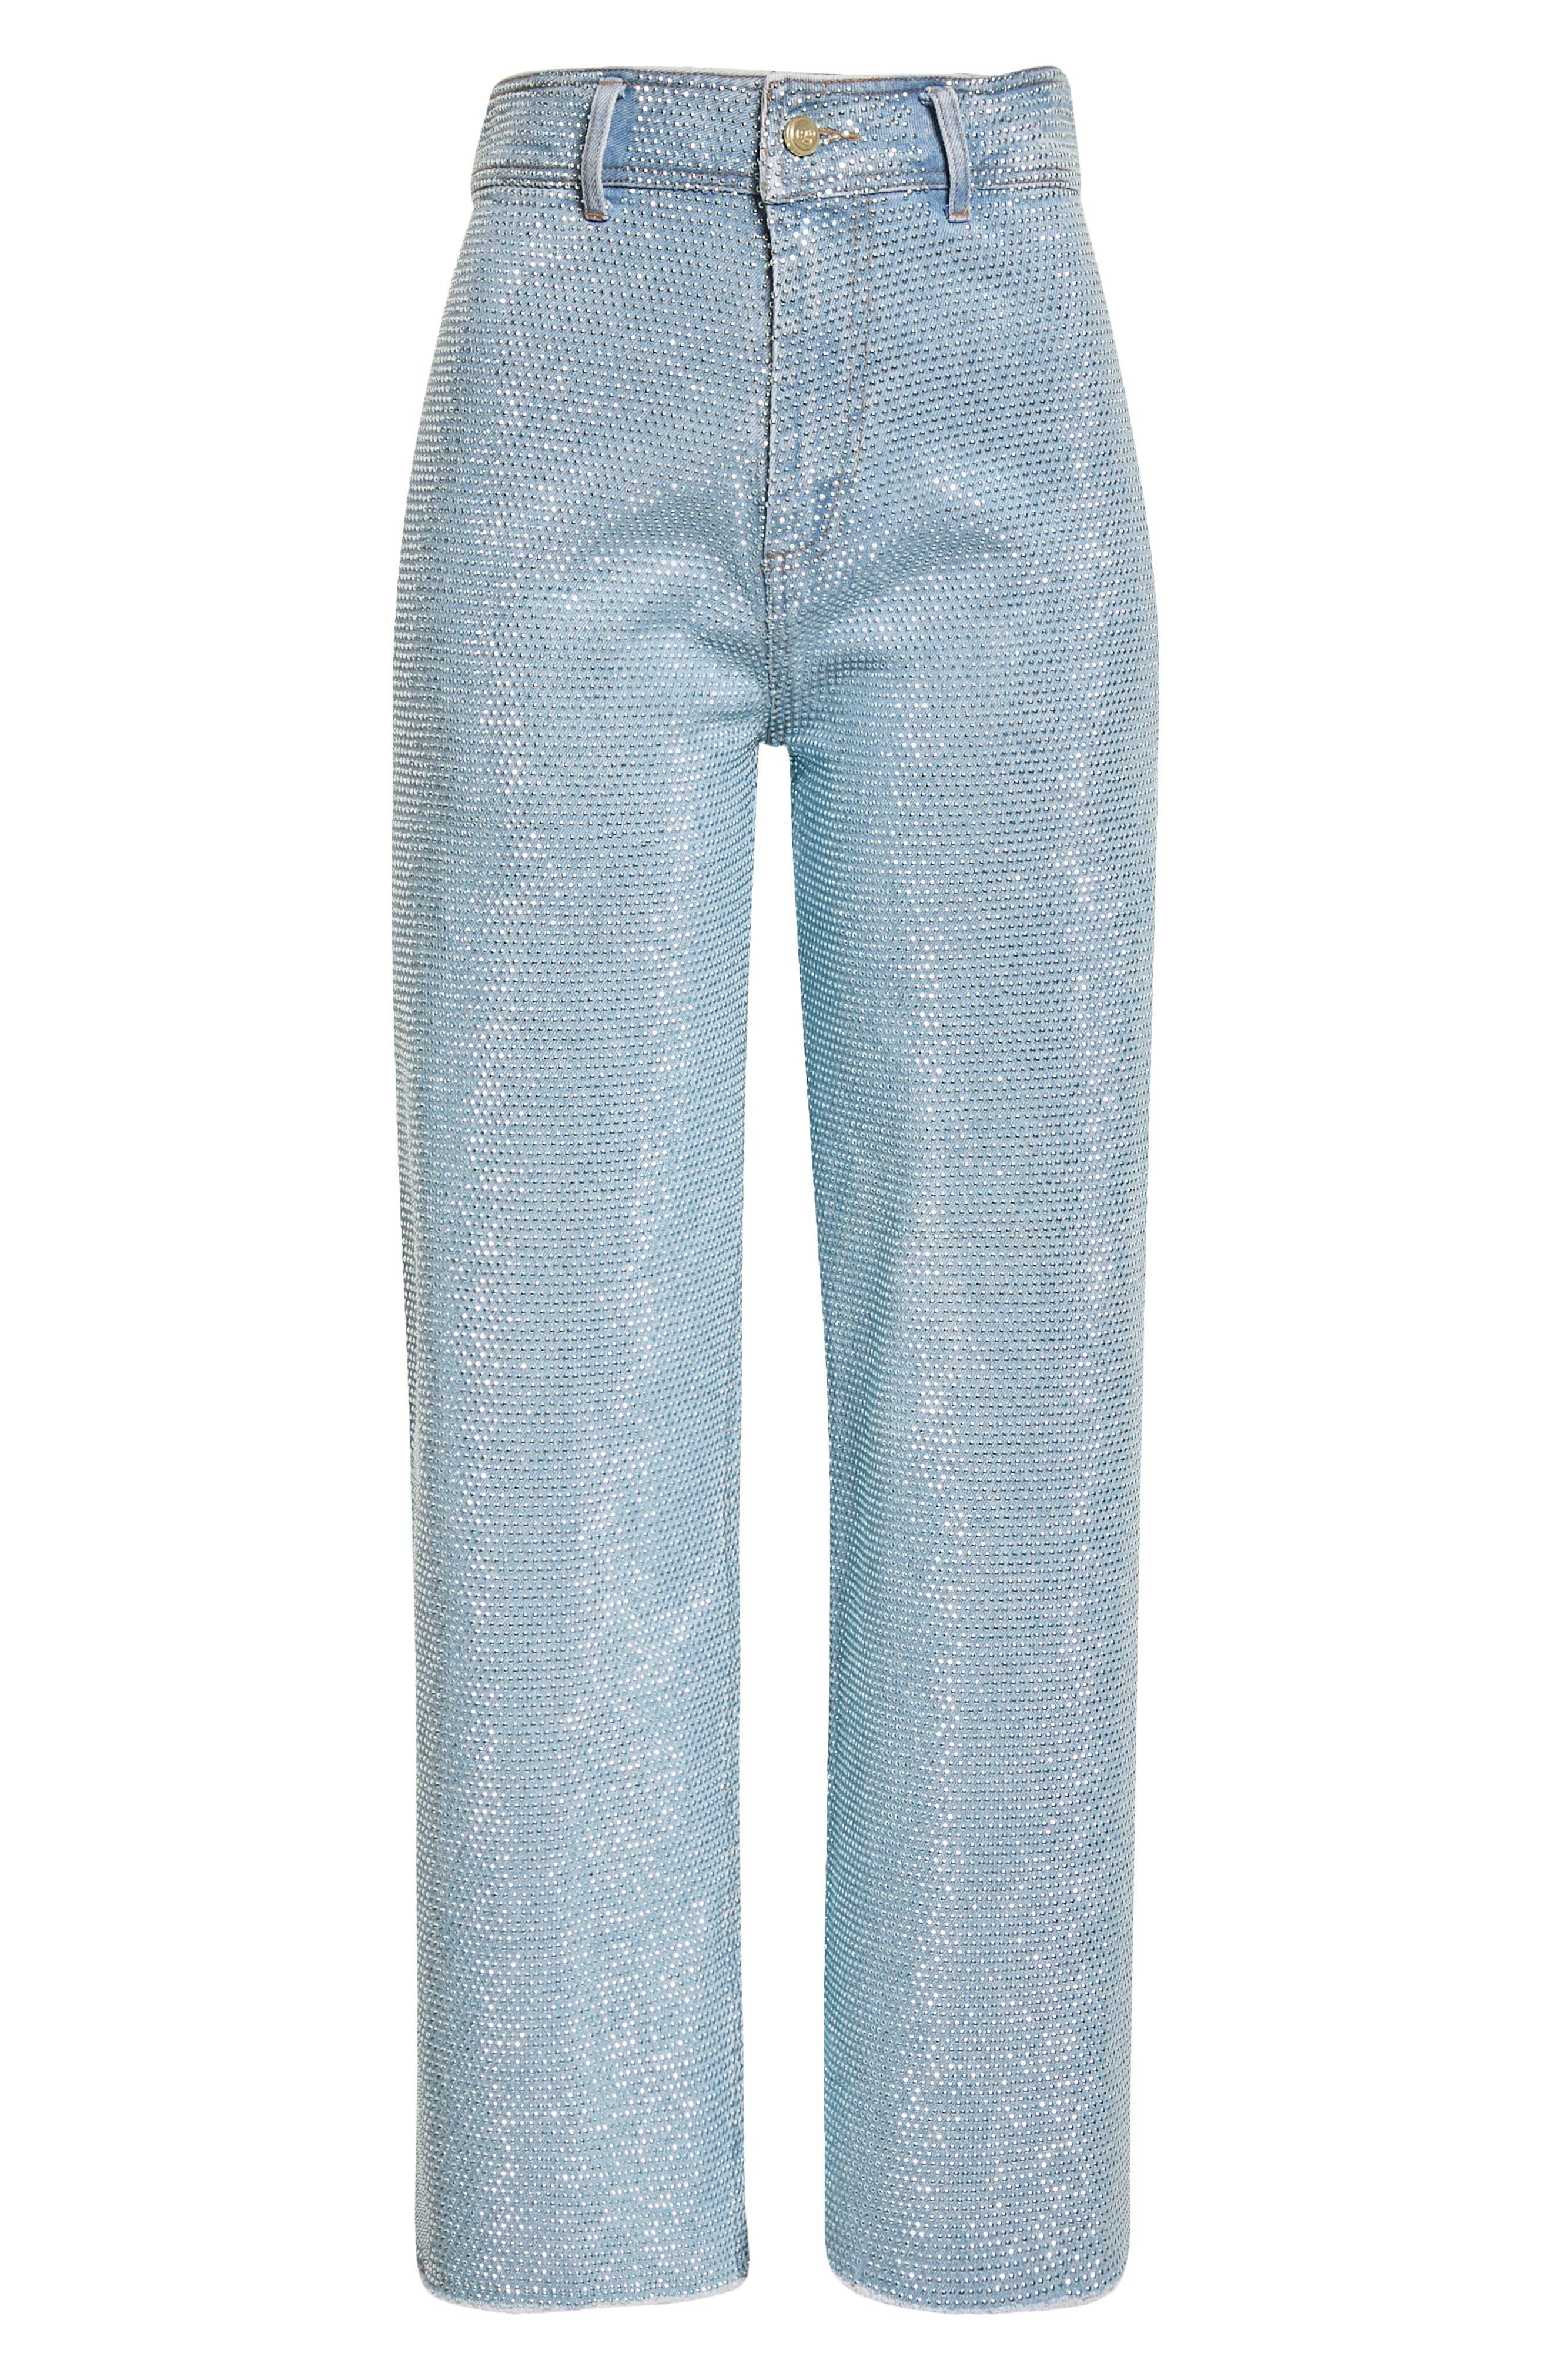 Cult Gaia Zelma Studded High Waist Jeans in Blue | Lyst